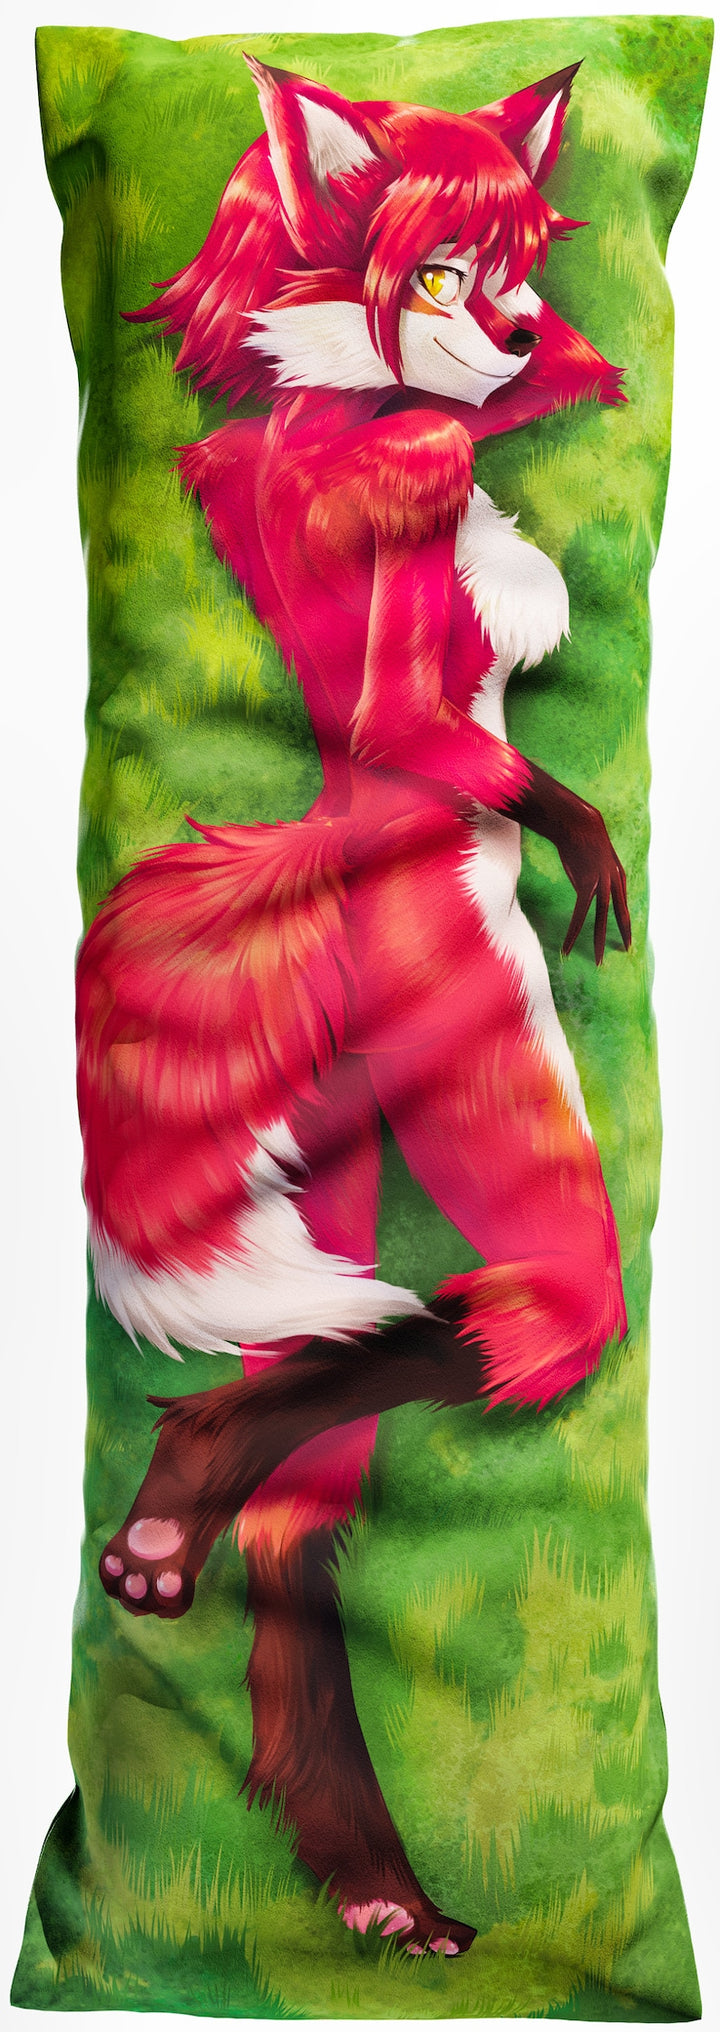 Daki Cherry - Art by Soapaint - The Red Fox Dakimakura Furry Body Pillow Cover fuzzy floofy